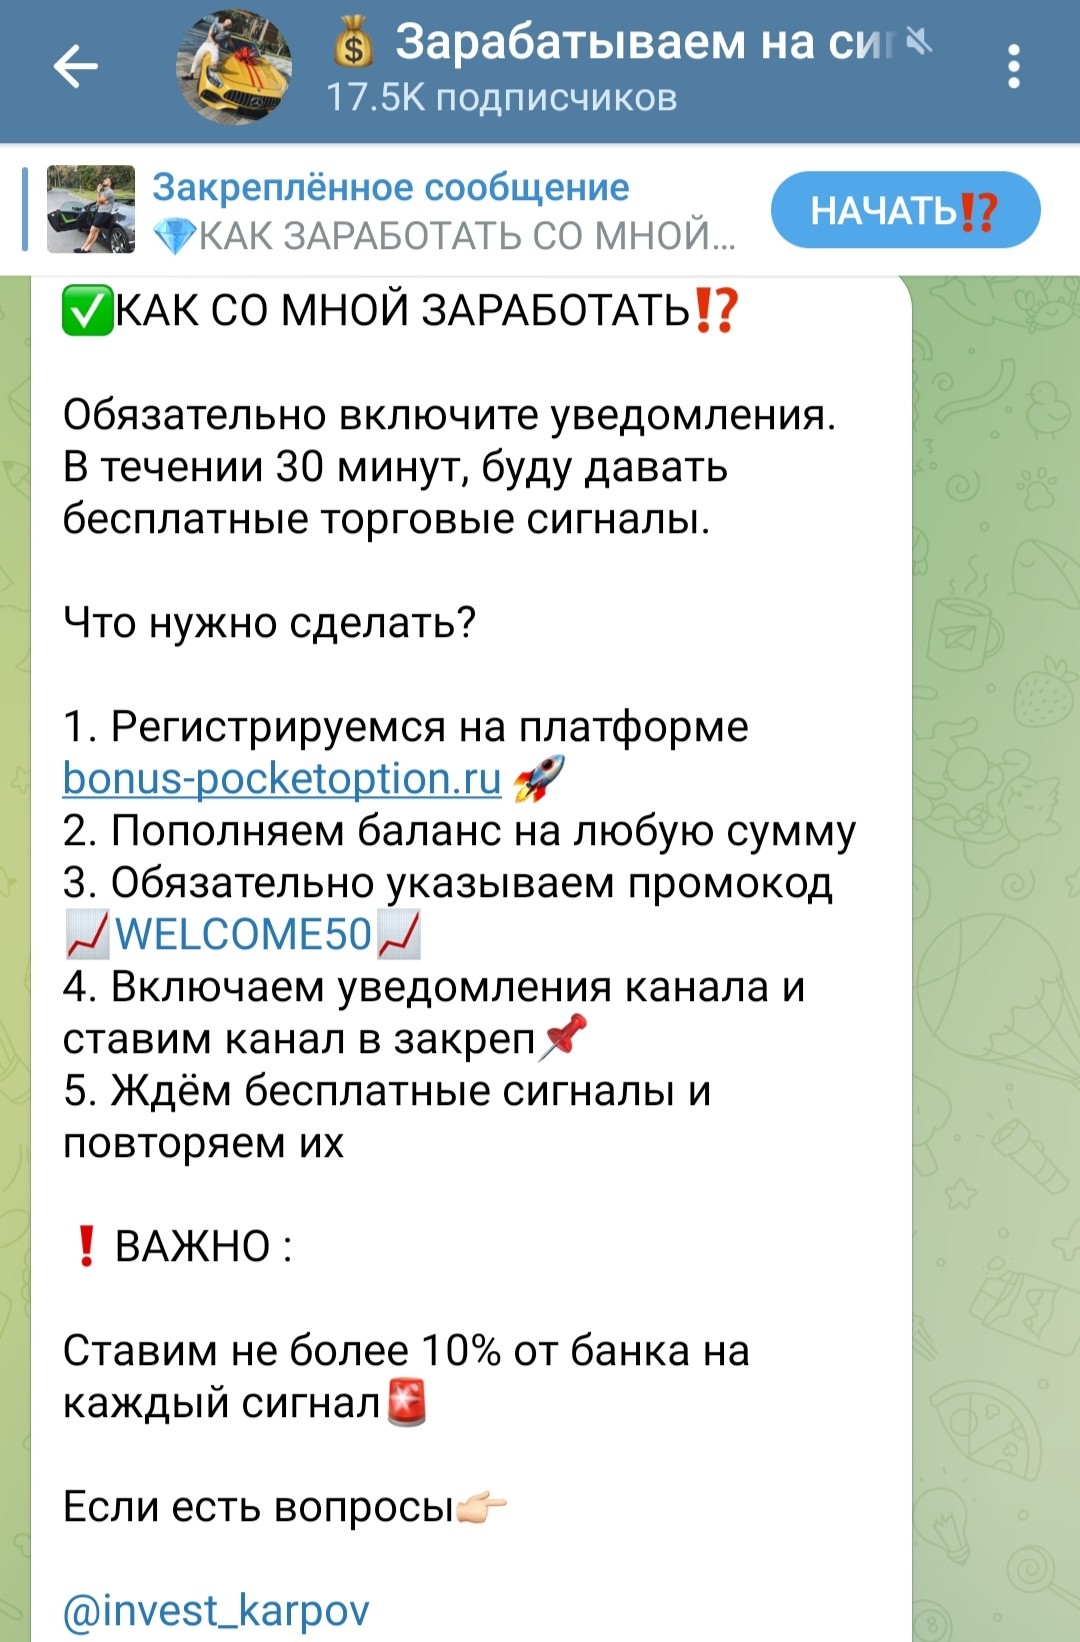 Телеграм Александр Карпов условия сотрудничества